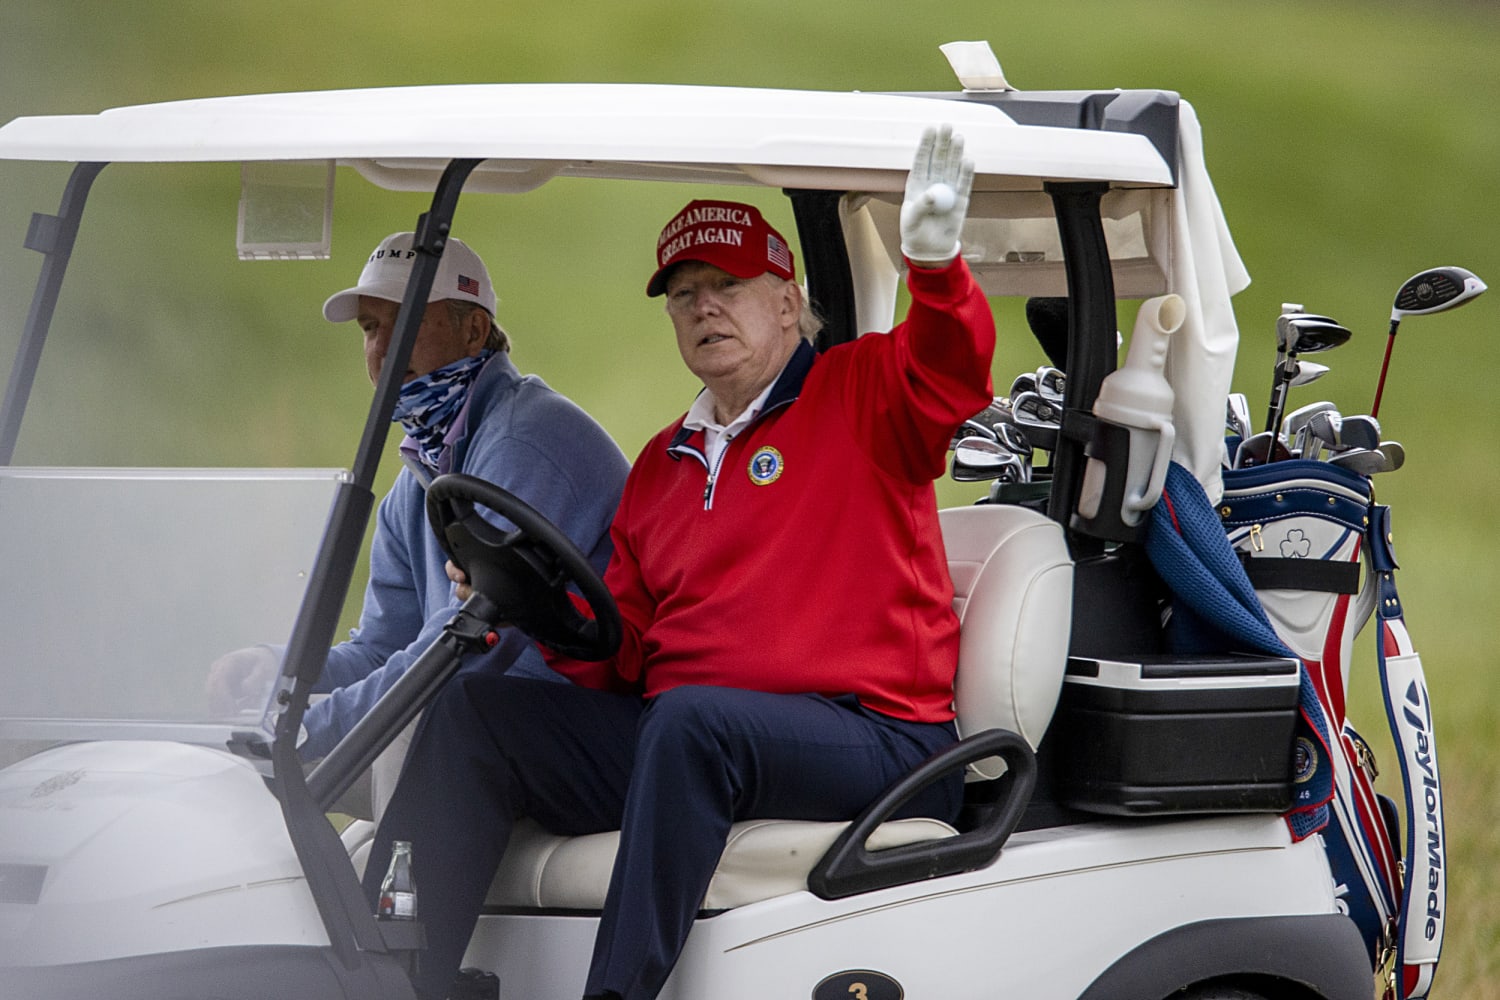 Trump hosts controversial Saudi-funded golf tournament as he mulls 2024 bid